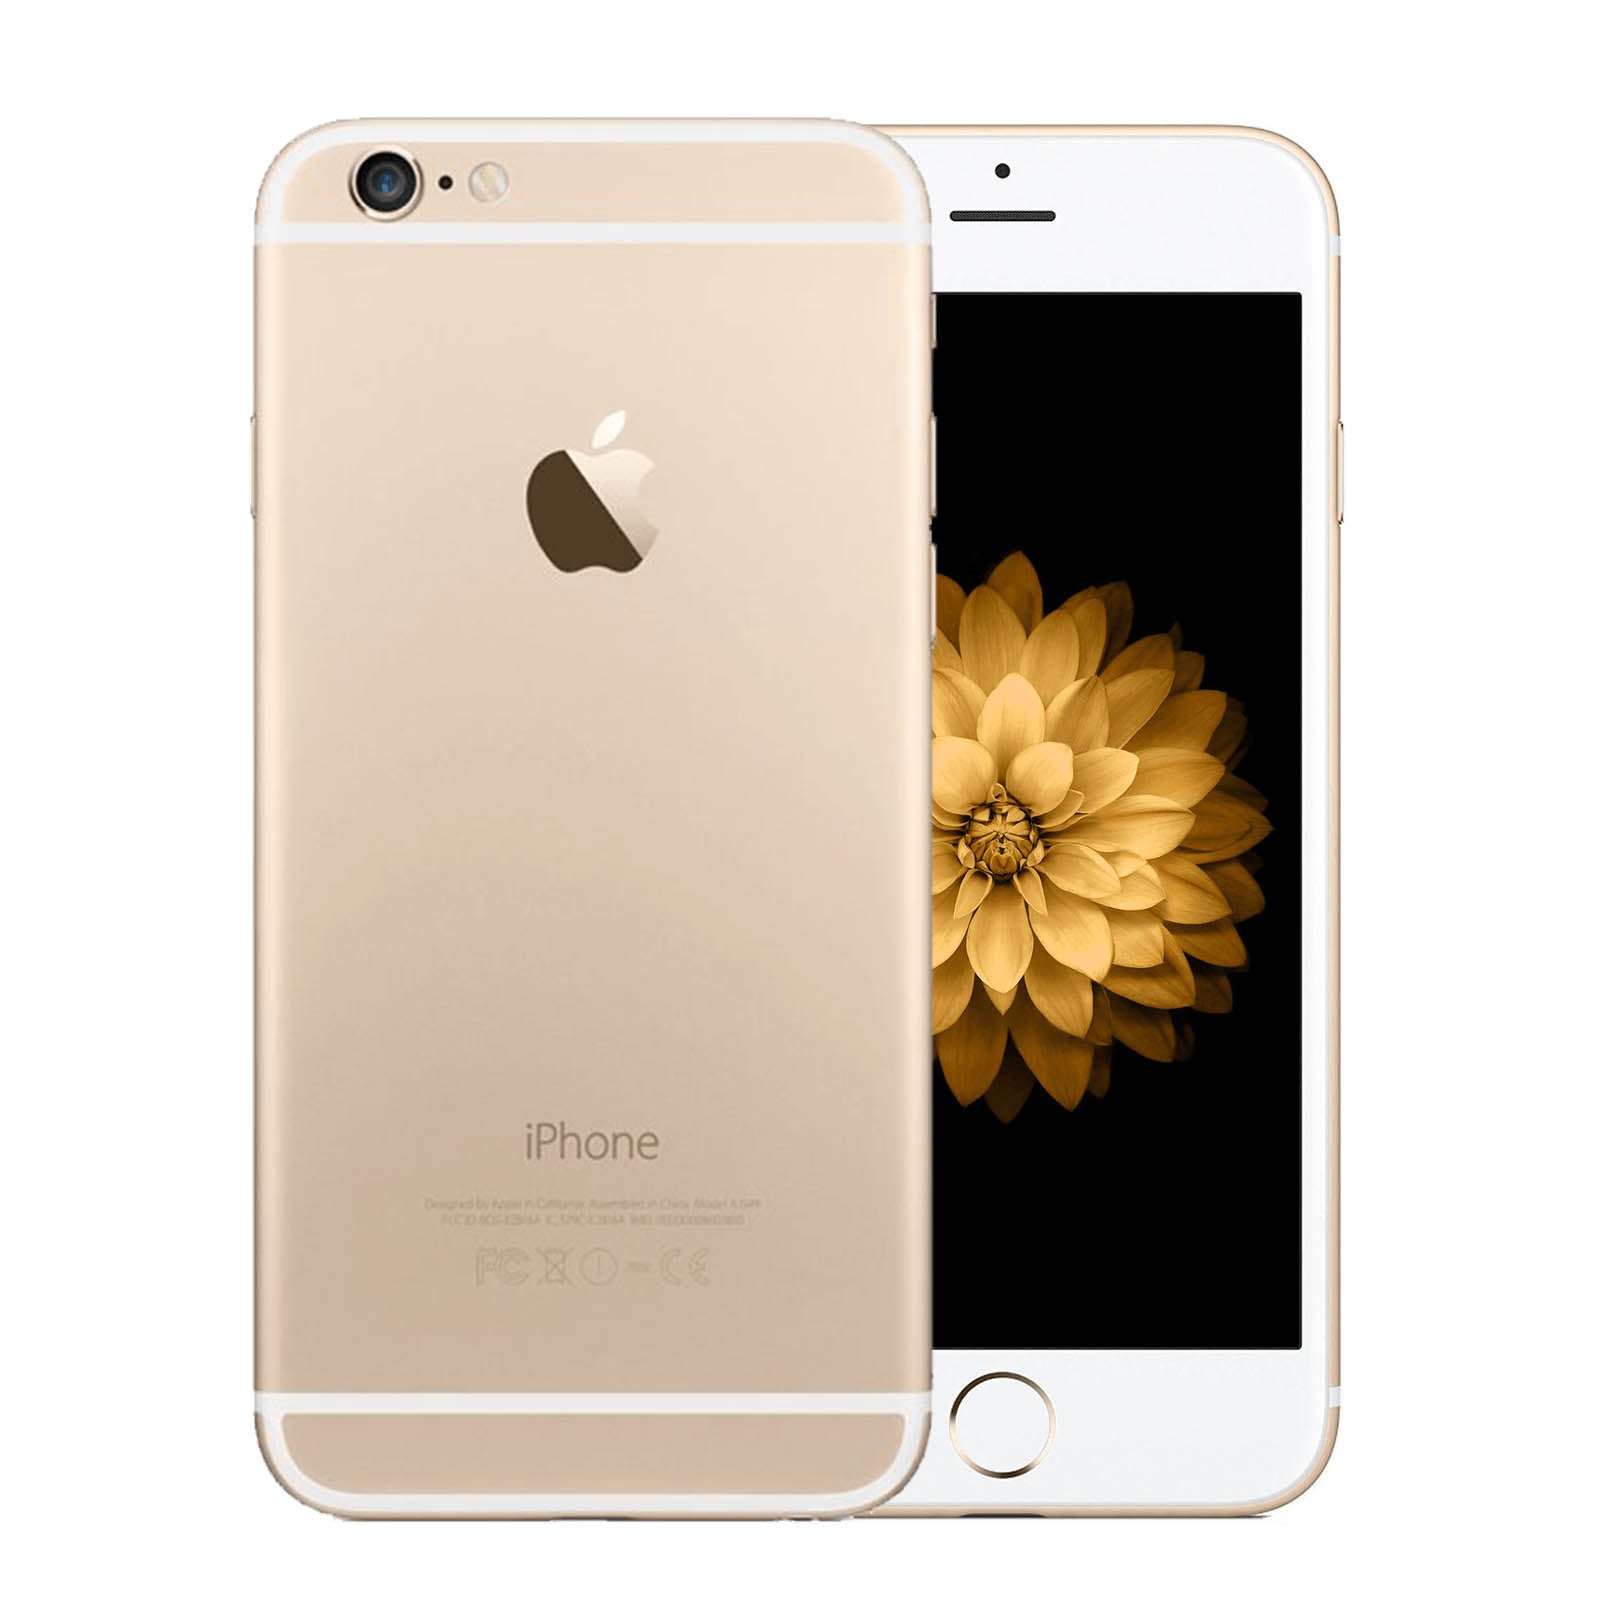 Apple iPhone 6 64GB Gold Very Good - Unlocked